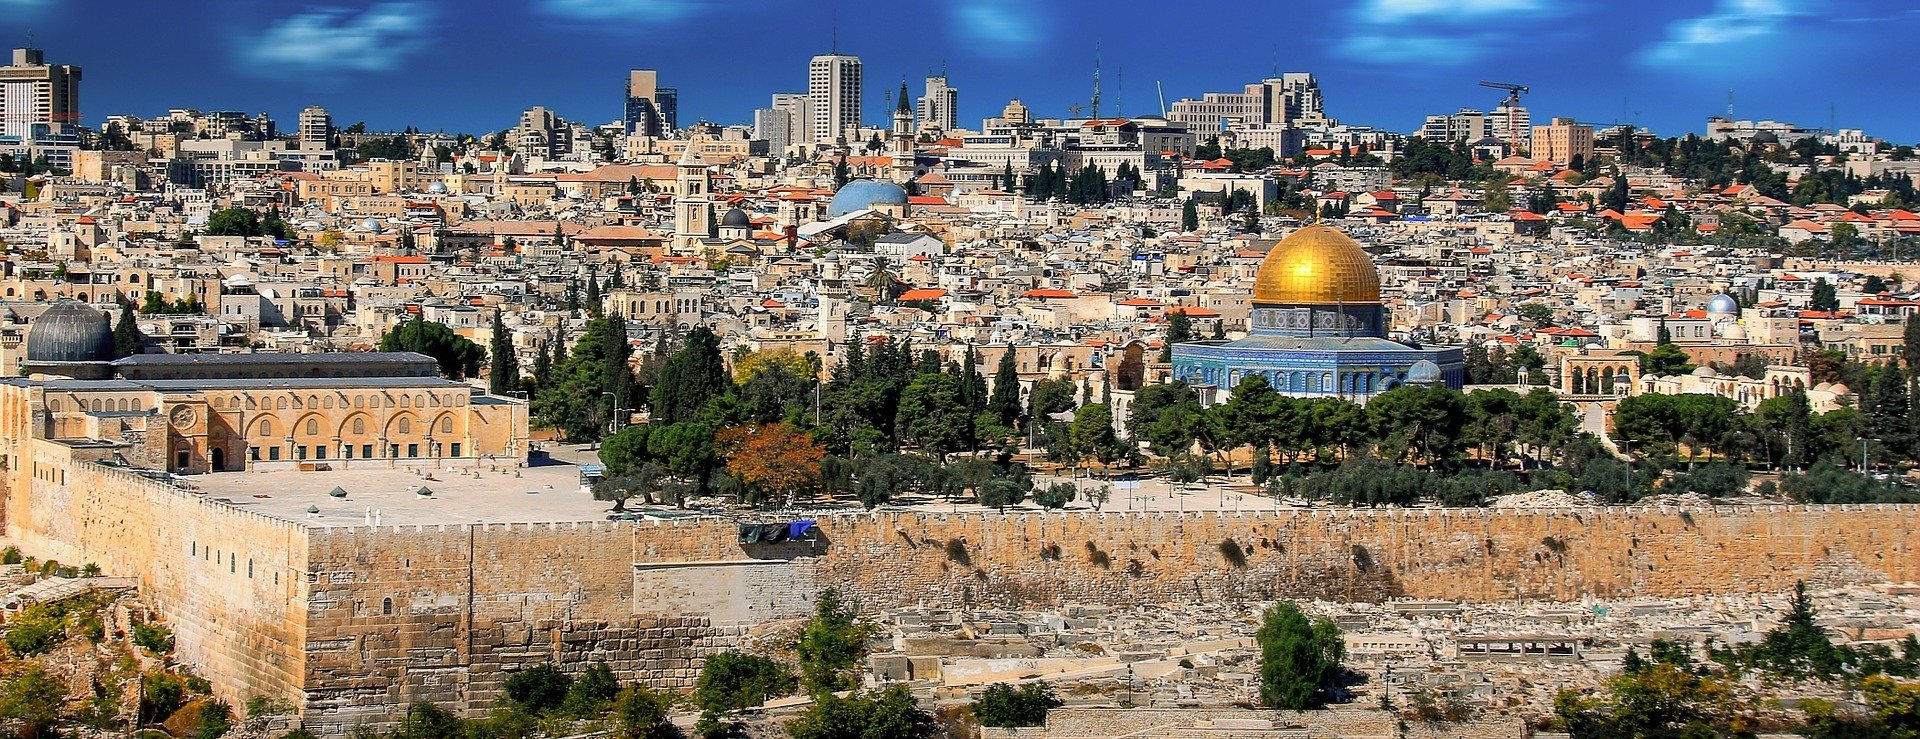 Jerusalem (c) www.pixabay.com